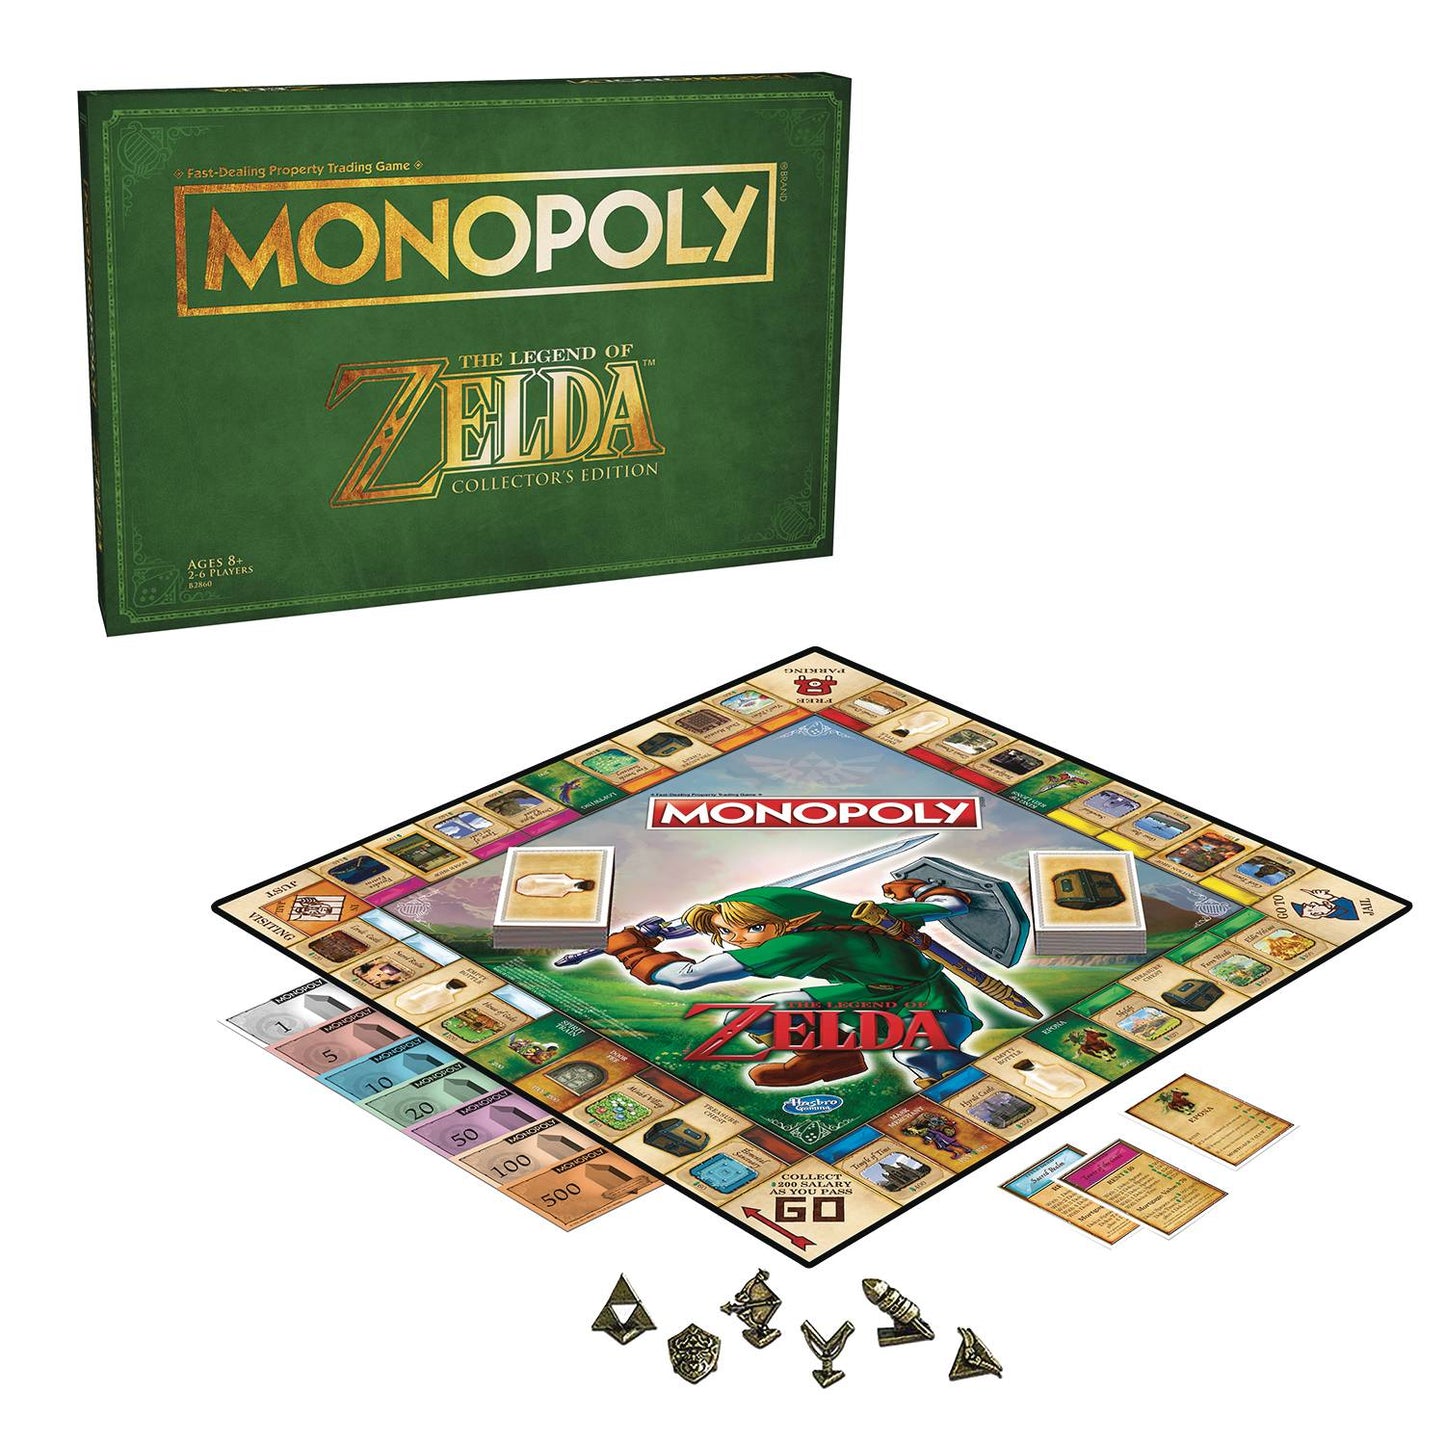 Monopoly Legend of Zelda Edition